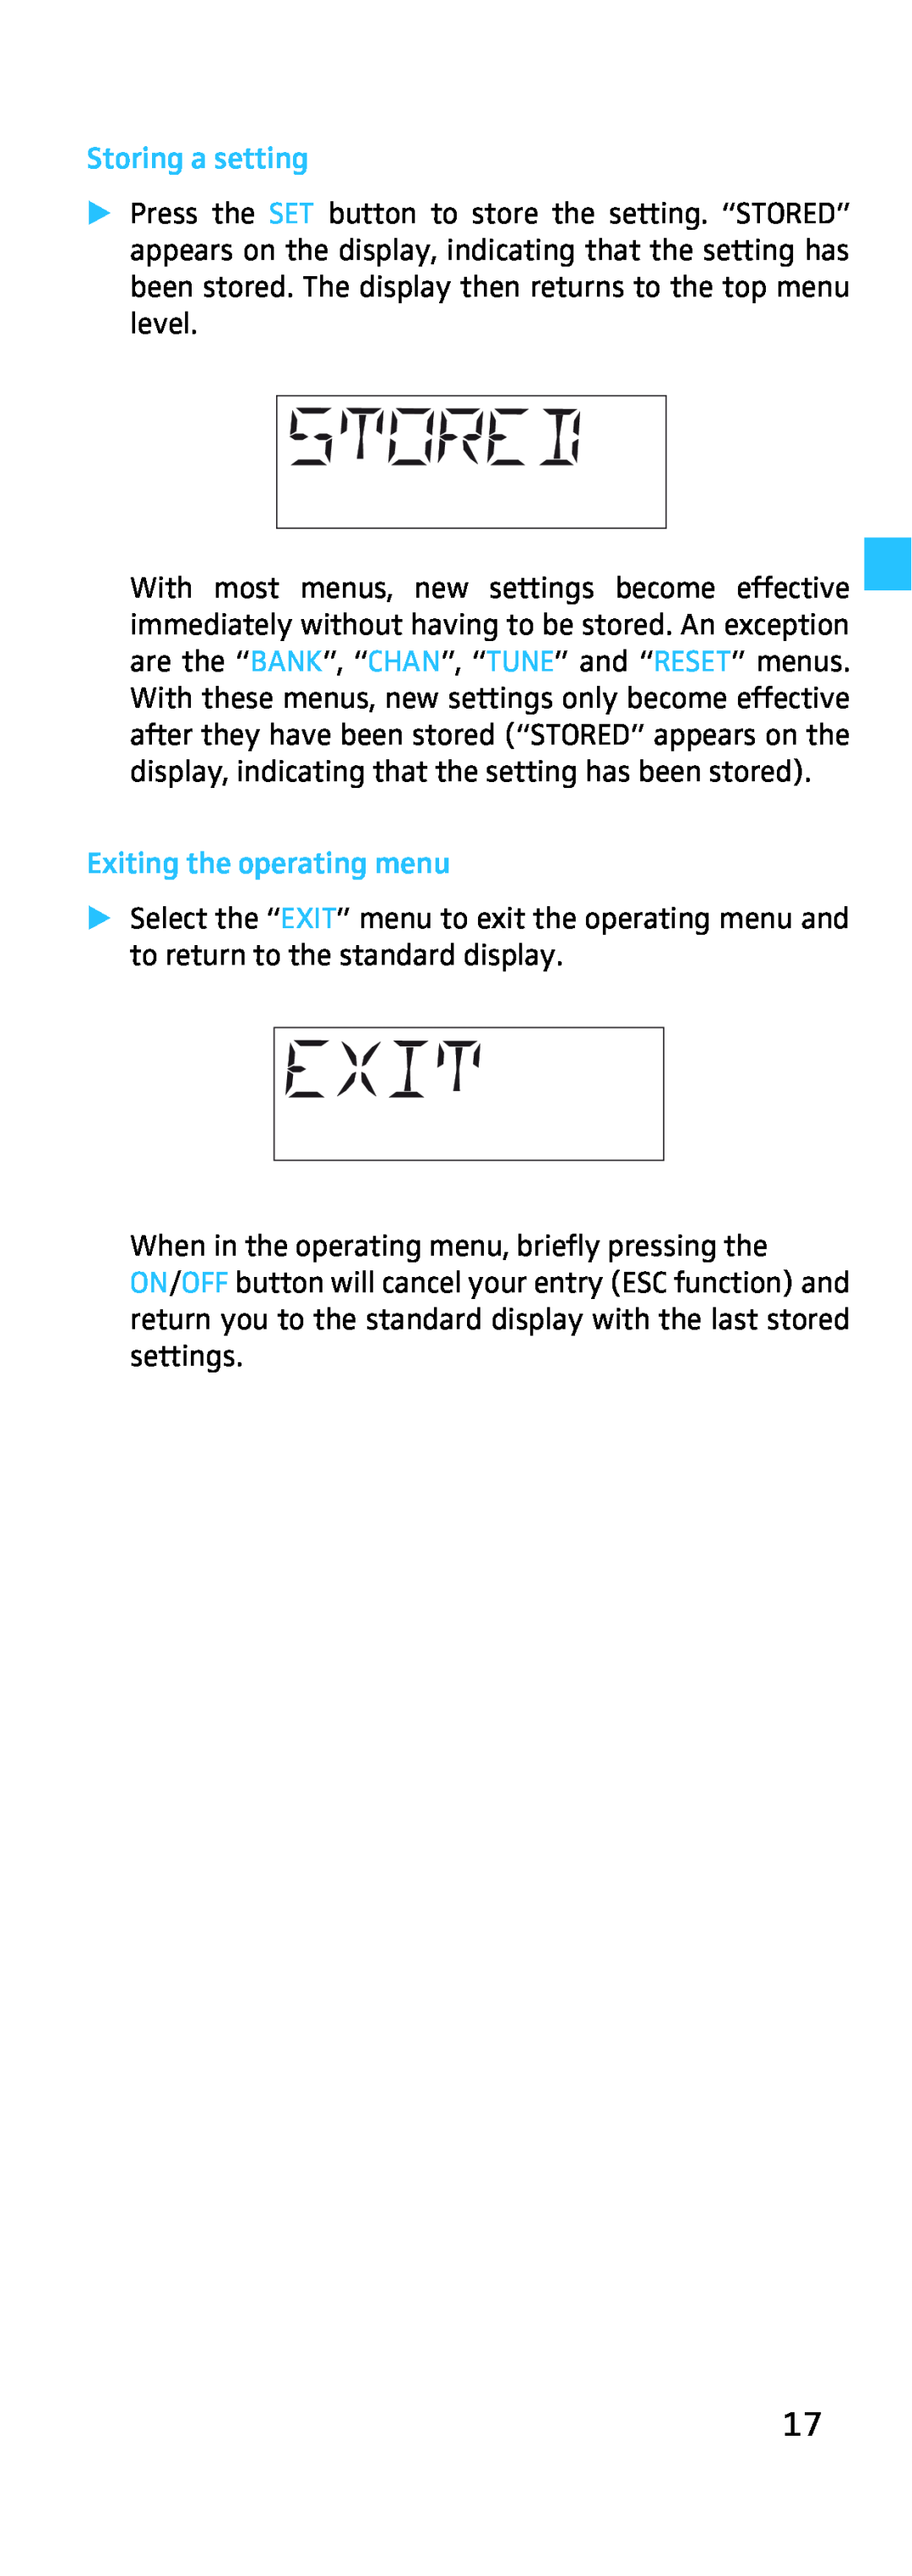 Sennheiser EK 500, SK 500 Storing a setting, Exiting the operating menu, When in the operating menu, briefly pressing the 